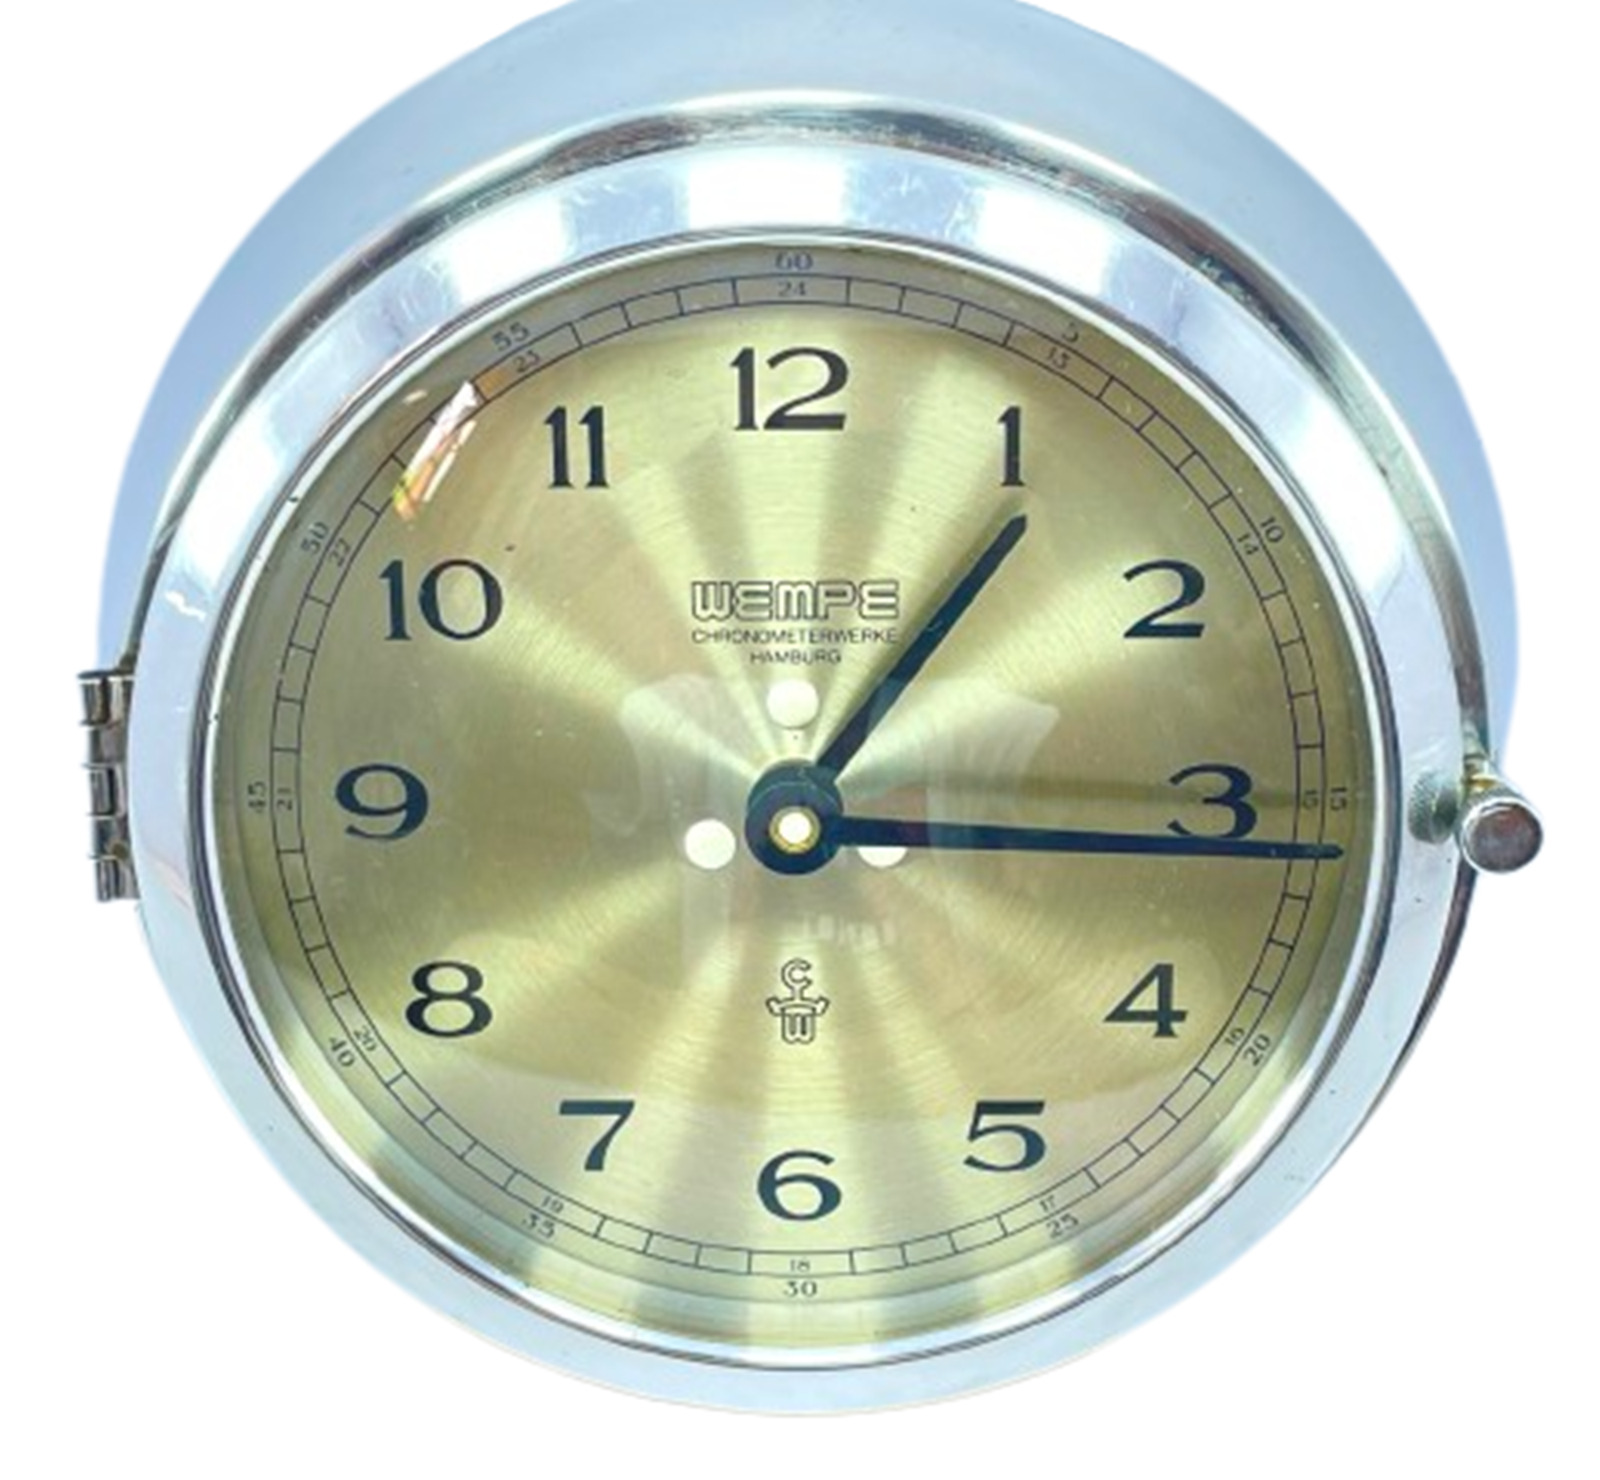 Wempe 20404 Chronometerwerke Master Clock Digital Electric Marine Ship 12V / 24V